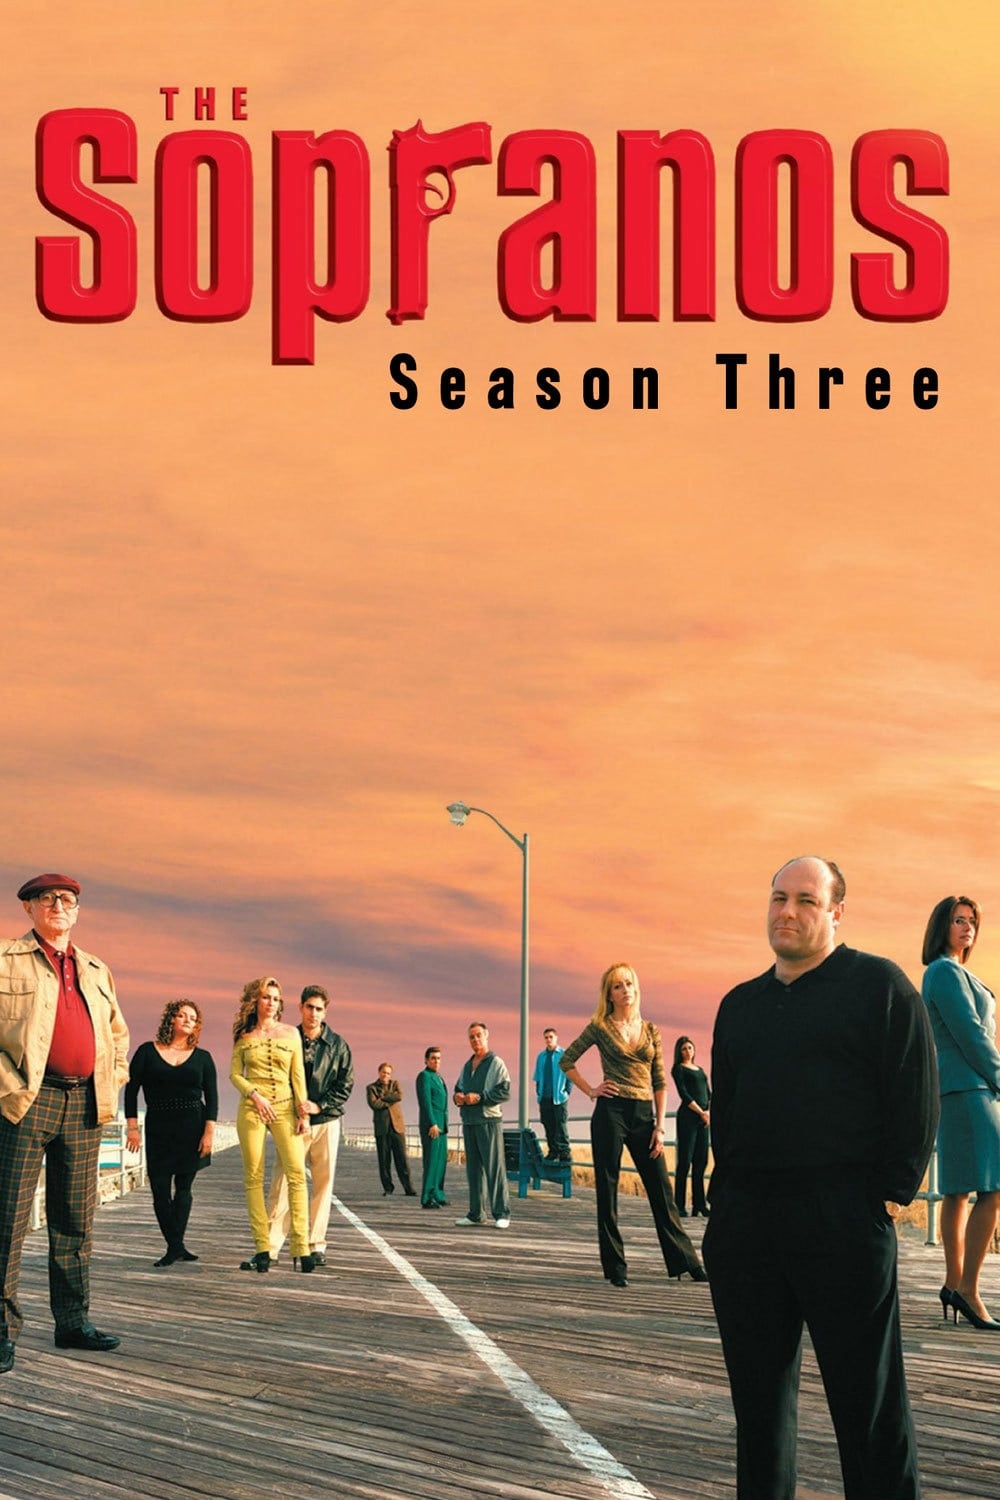 The Sopranos เดอะ โซปราโน่ส์ Season 3